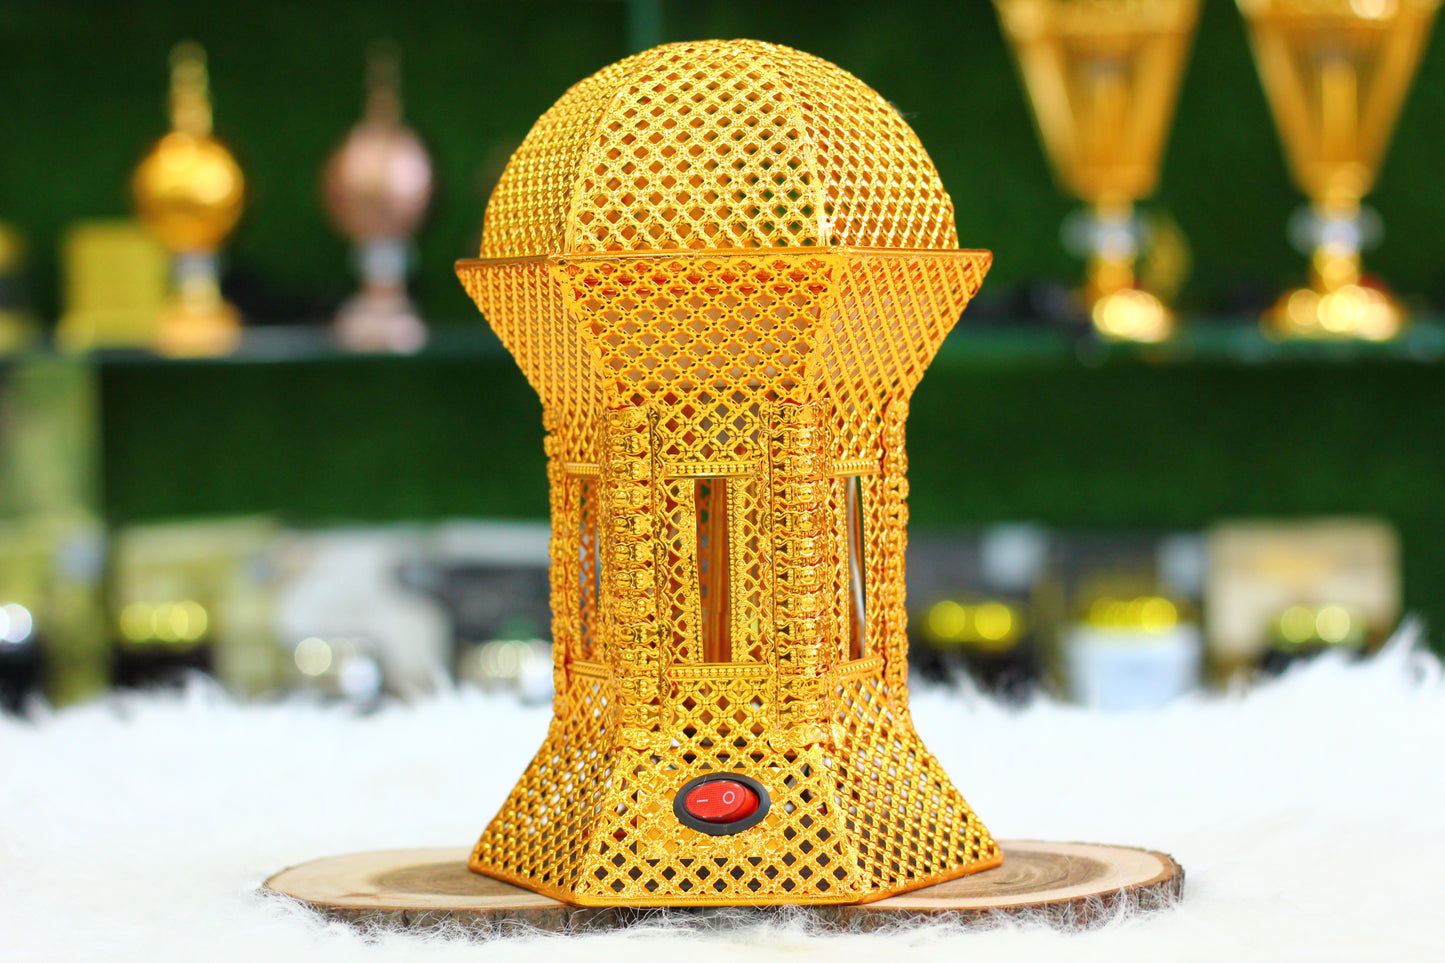 Golden Bahoor Burner - A Luxurious & Fragrant Incense Experience